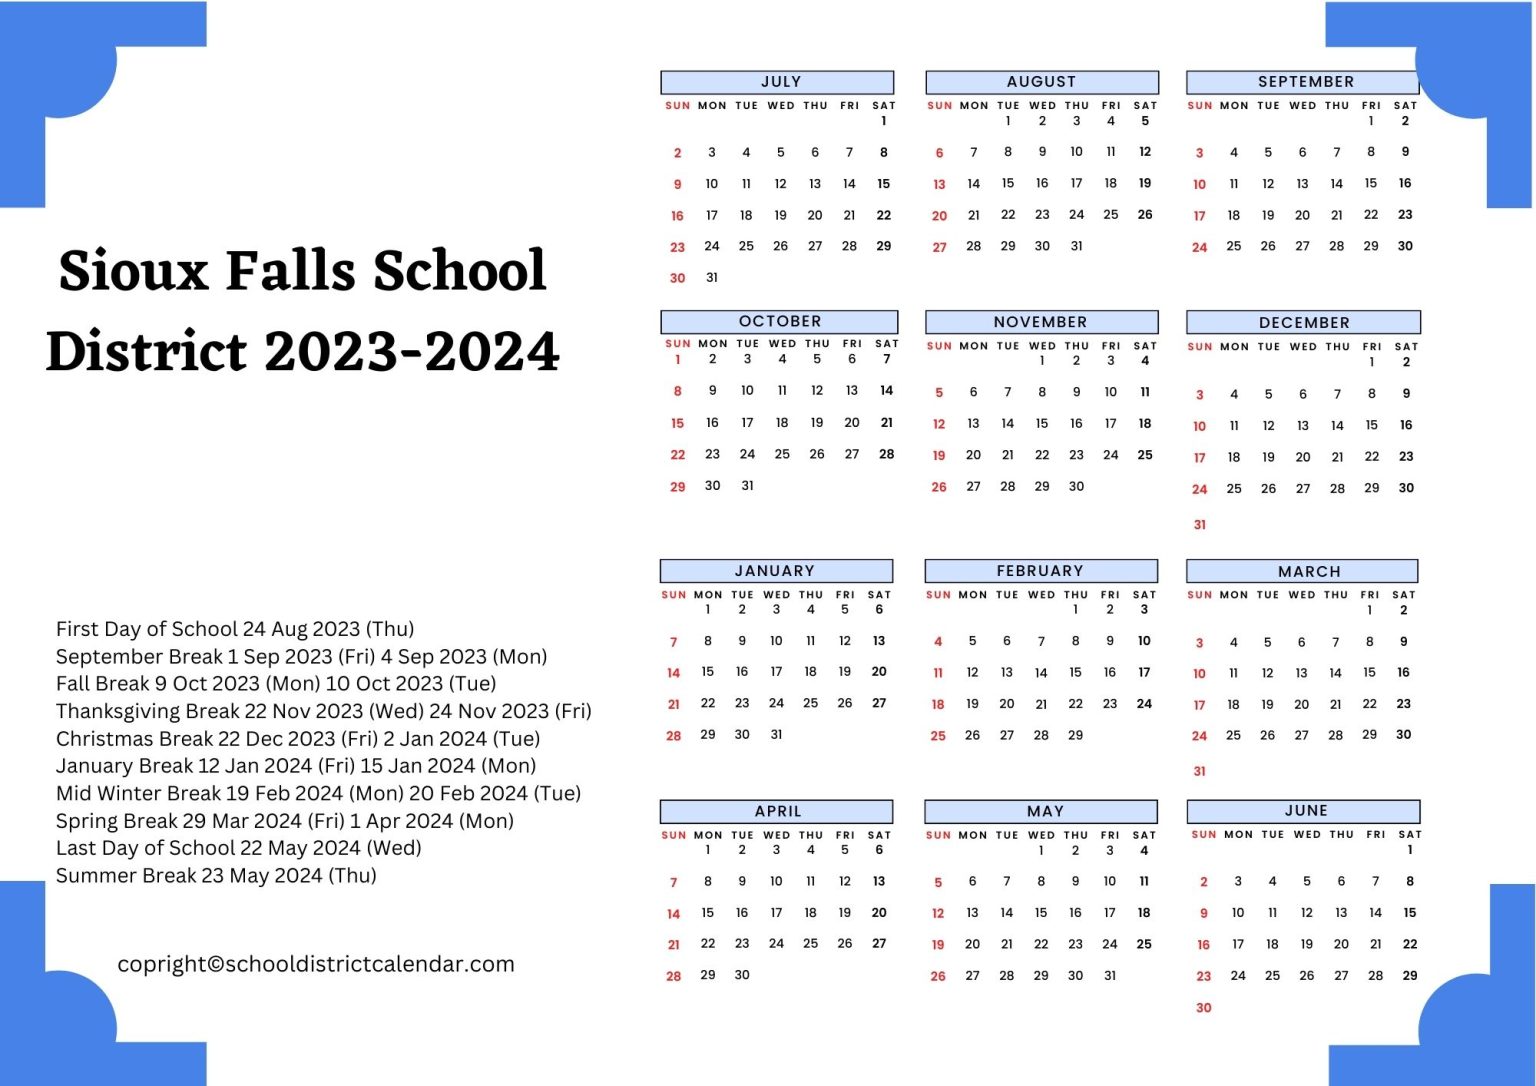 Sioux Falls School District Calendar Holidays 2023 2024